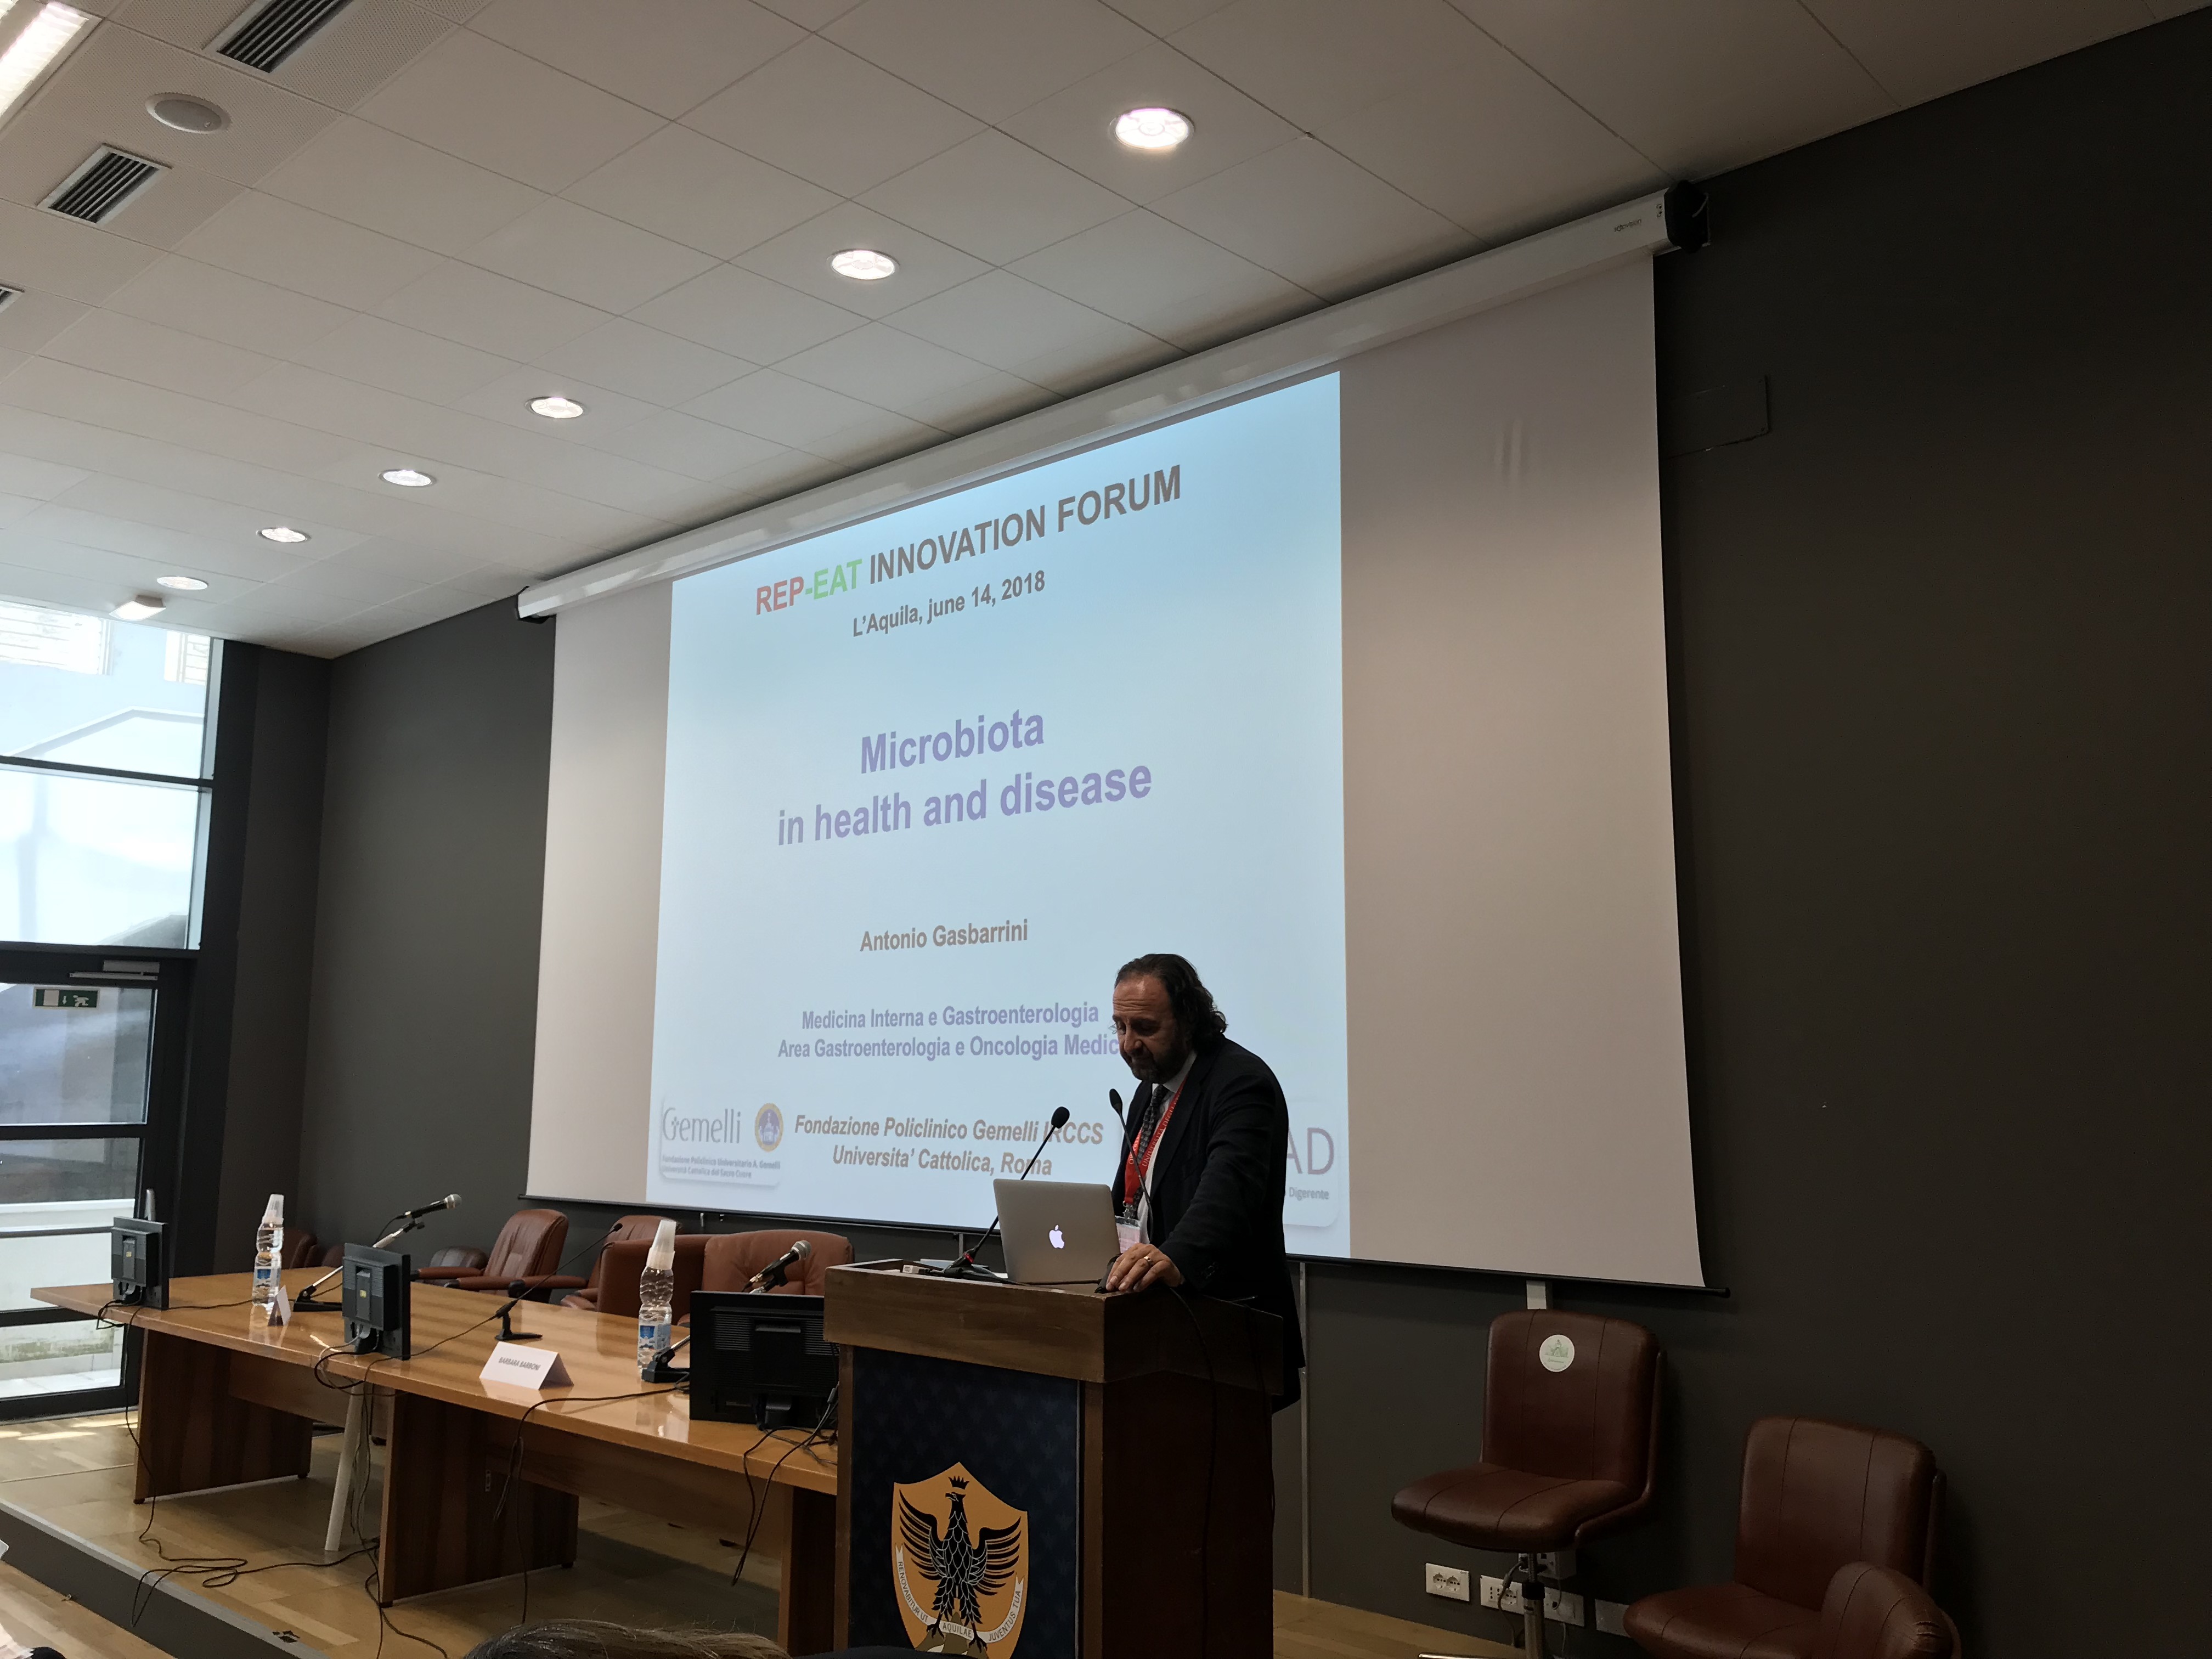 Prof. Antonio Gasbarrini, Rep-Eat Innovation Forum 2018